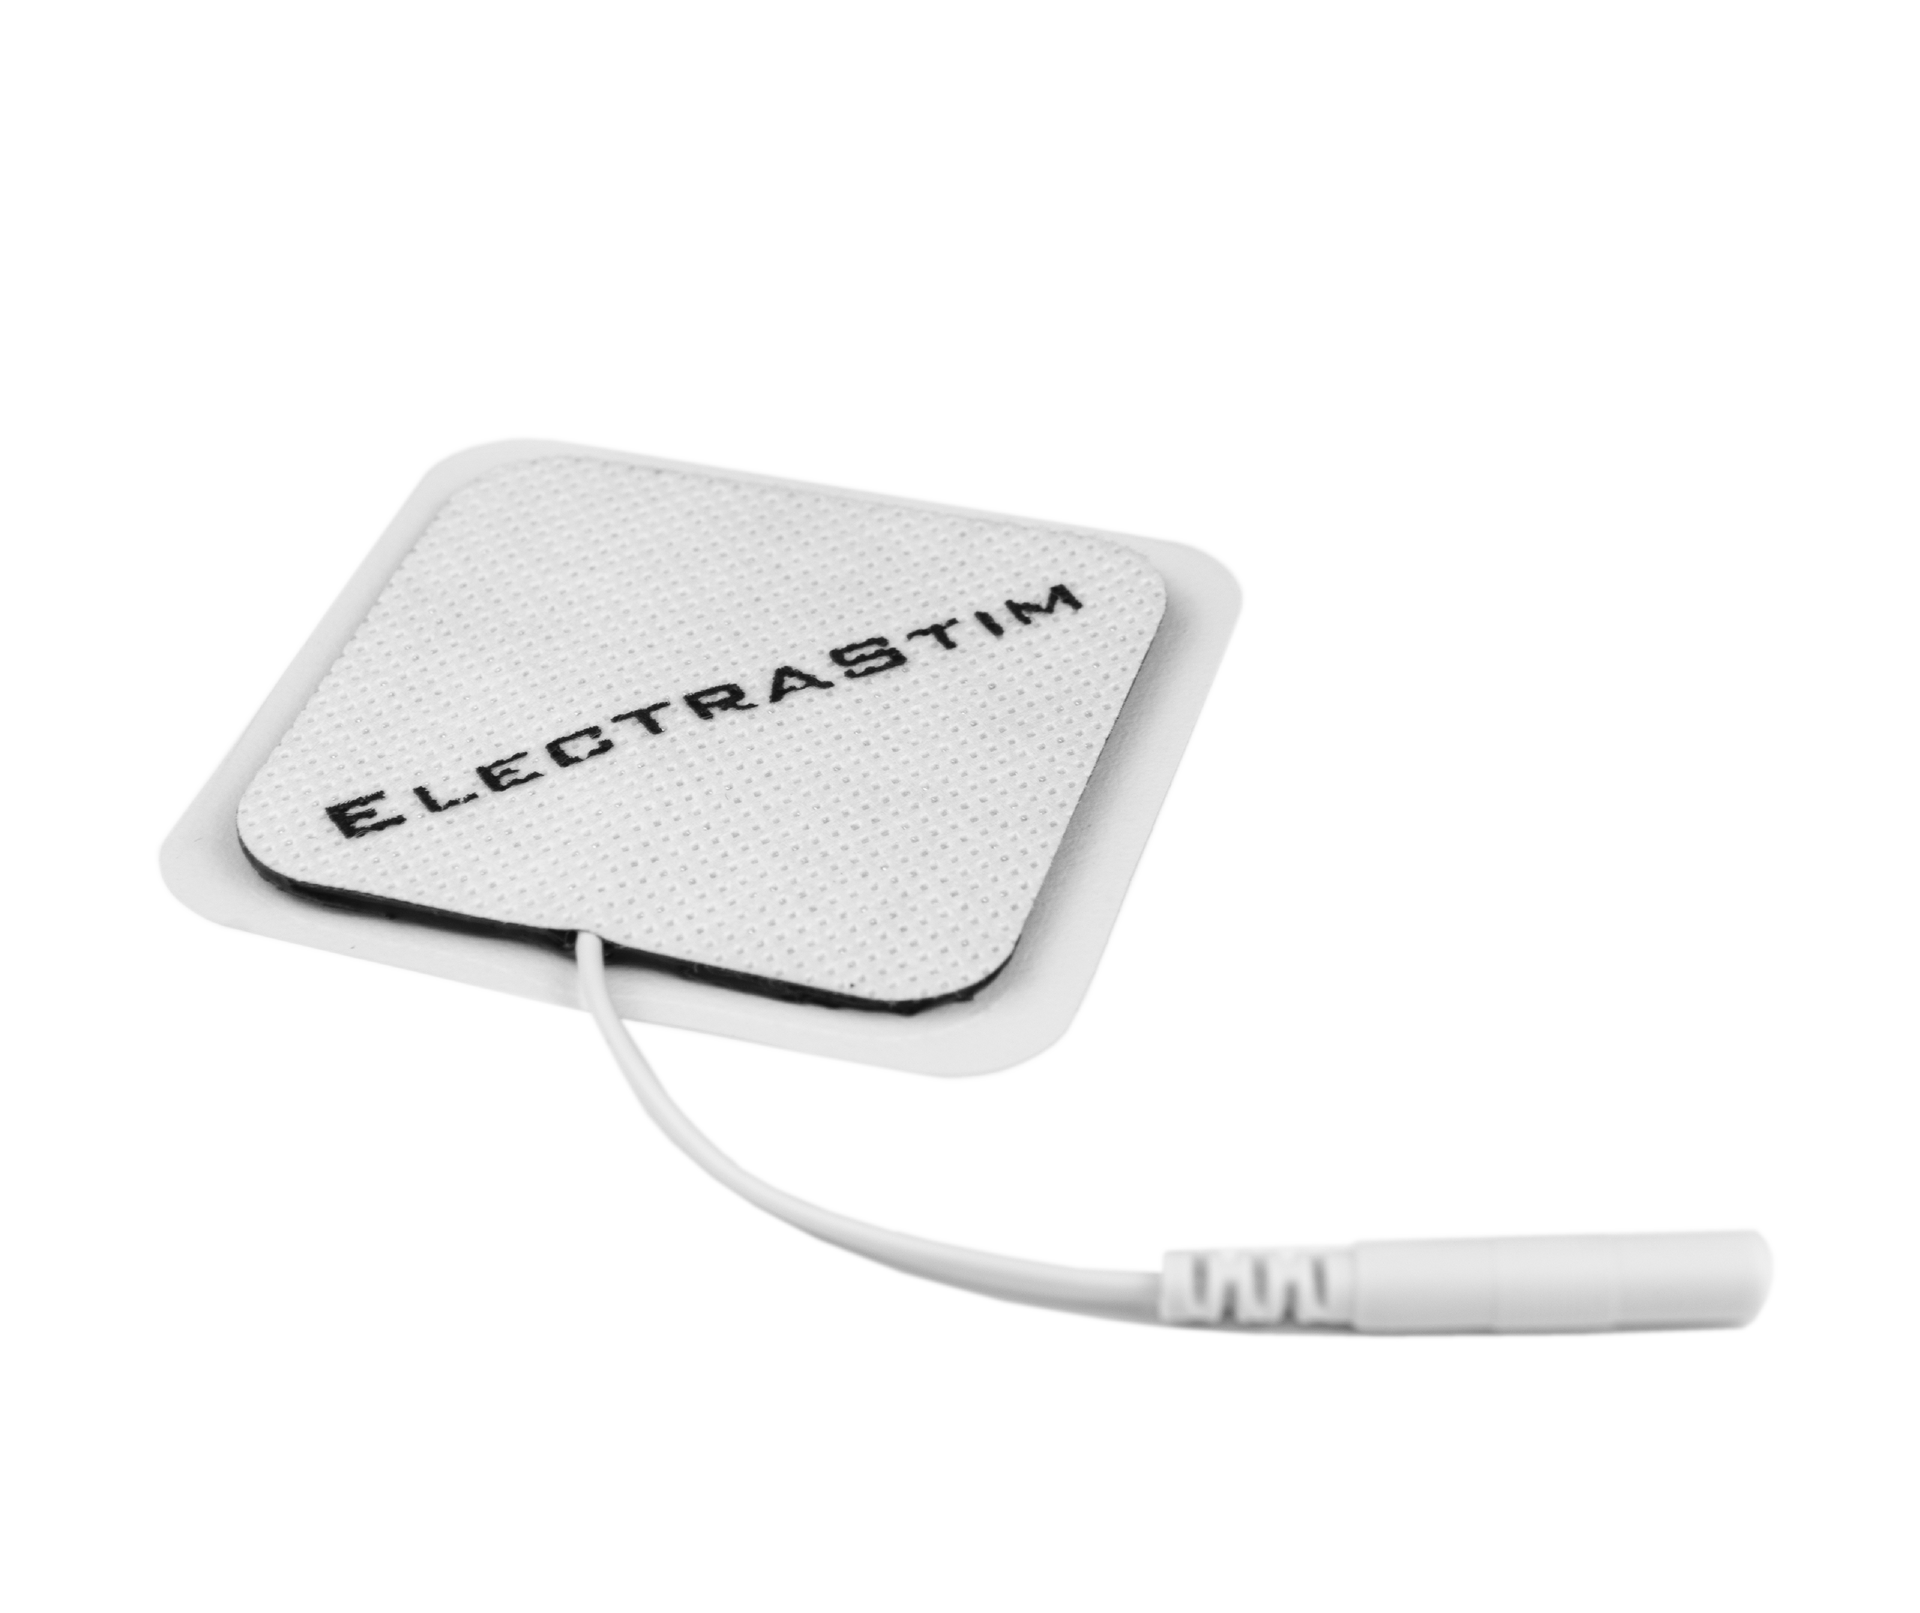 Square Self-Adhesive ElectraPads (Multi-packs available)-Electro Conductive Pads electro sex - estim USA- ElectraStim